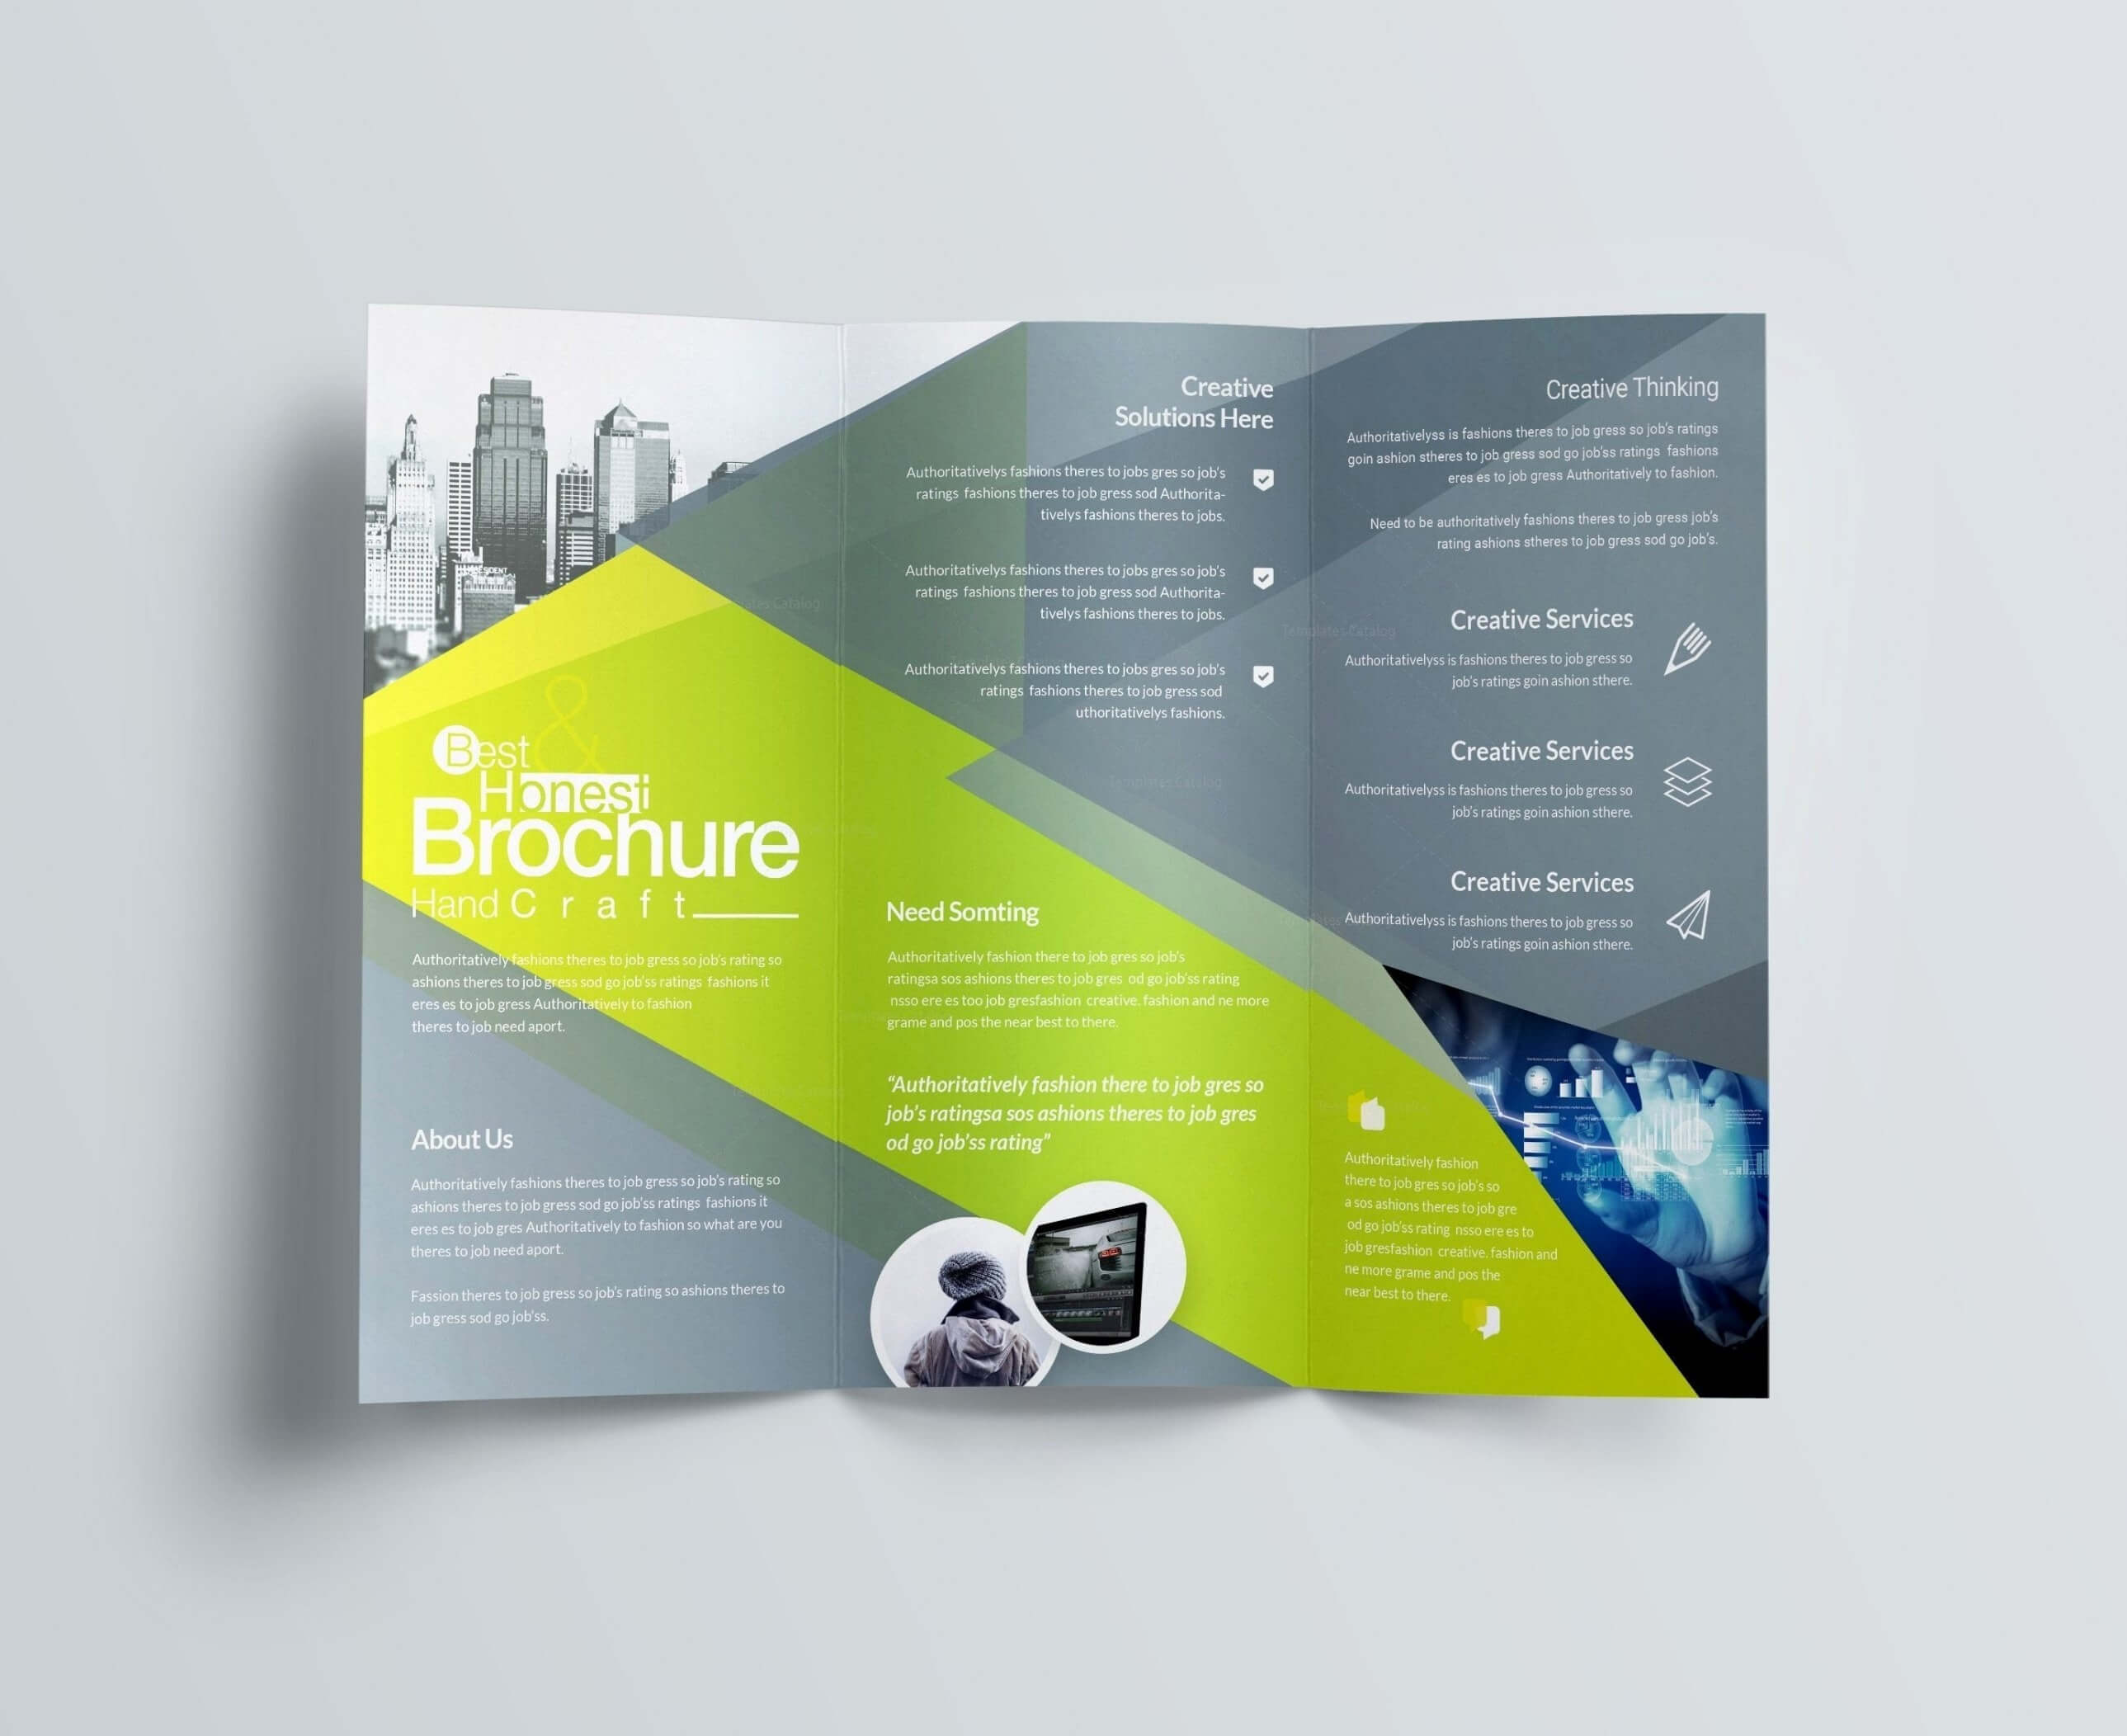 Computer Science Brochure Templates Design Free Download Intended For Free Brochure Template Downloads